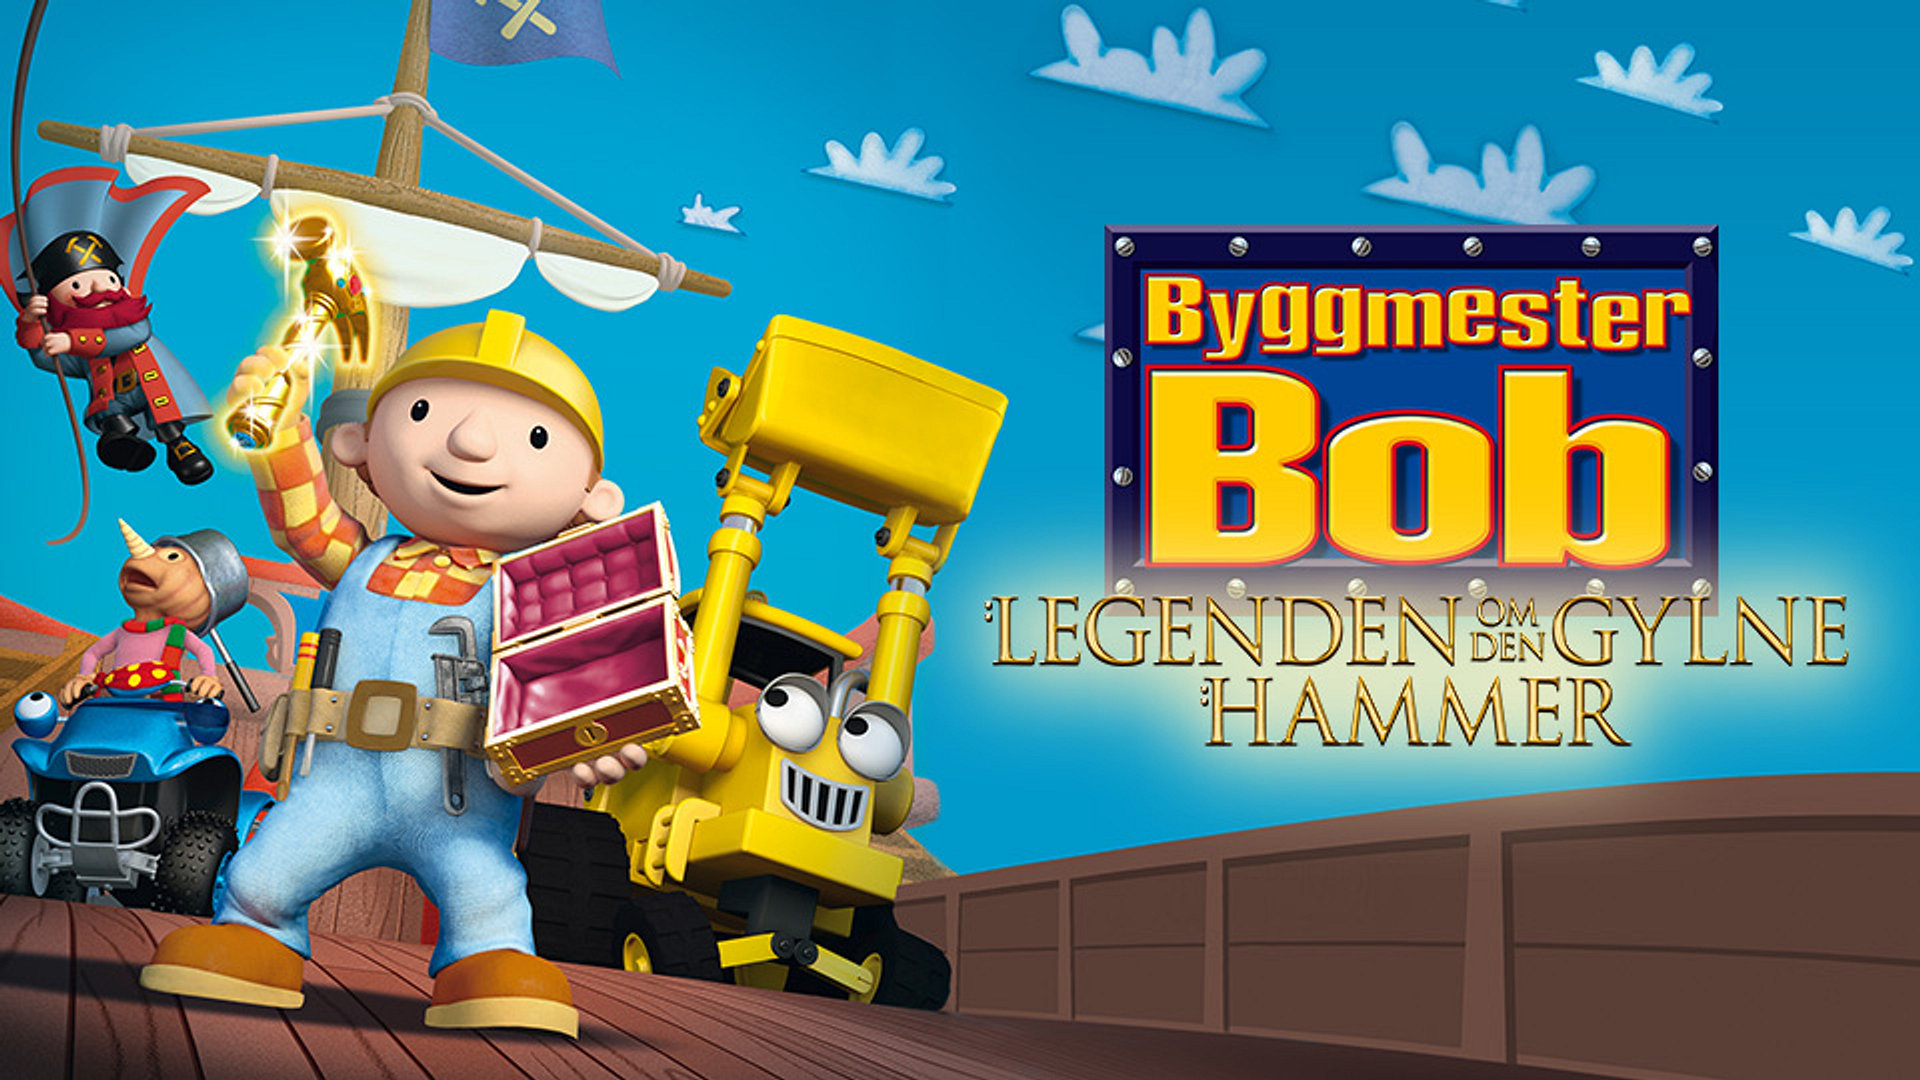 Byggmester Bob - Legenden om den gylne hammer